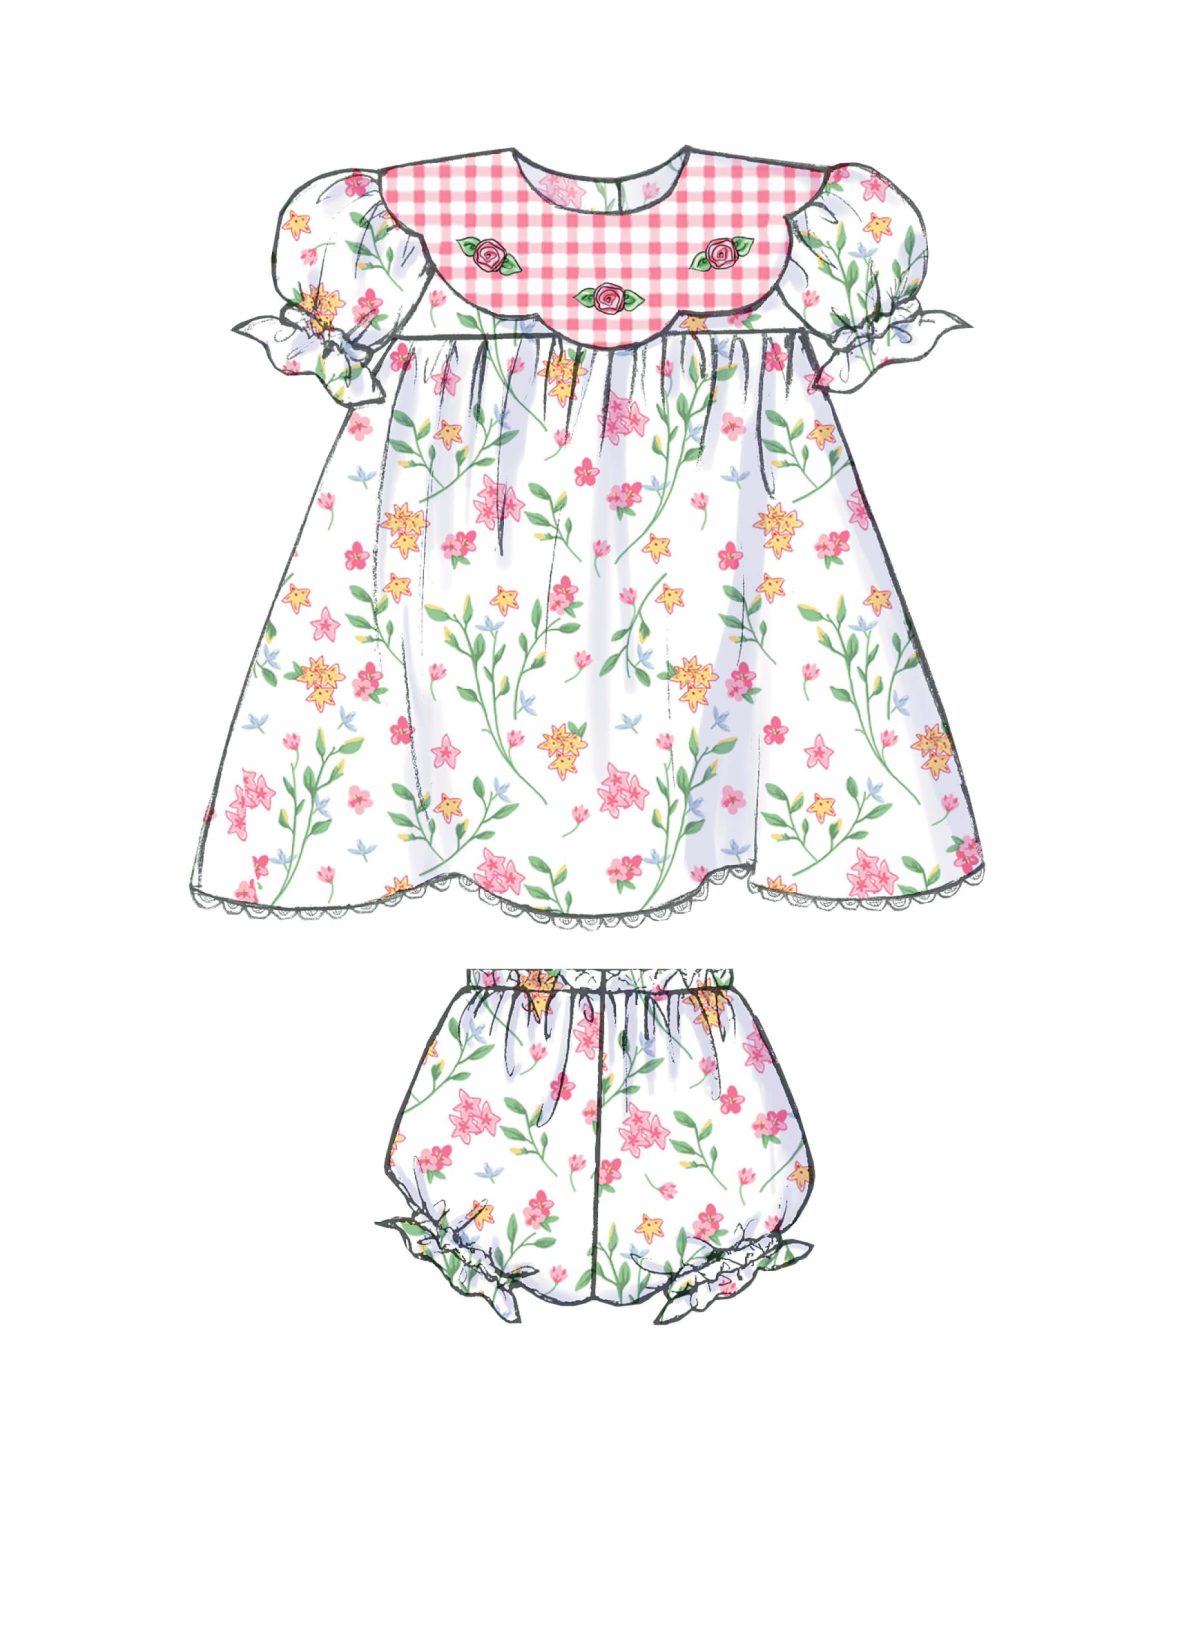 Butterick Sewing Pattern B4110 Infants' Dress, Panties, Jumpsuit and Hat